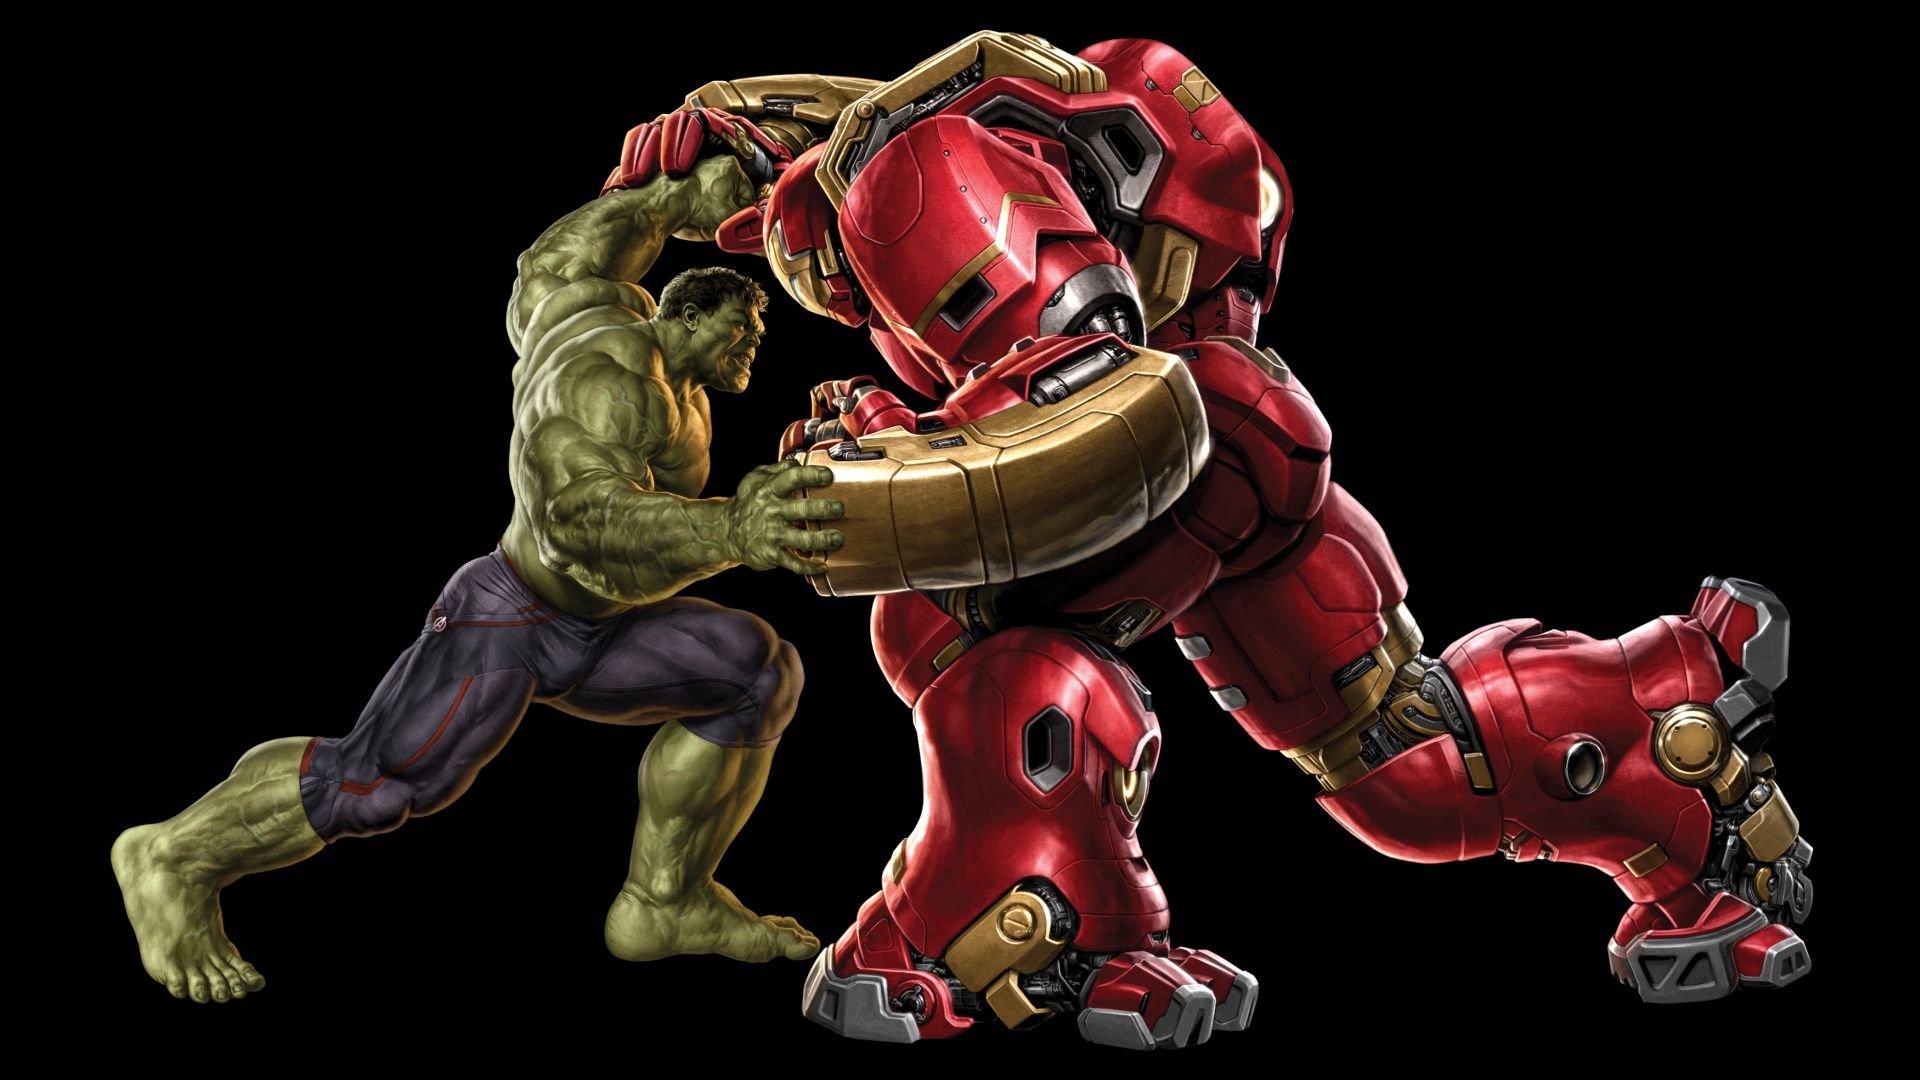 Davide Zezza Art - Drawing Hulk vs Hulkbuster - The Avengers👊 #drawing # hulk #avengers #art 👇Link YouTube👇 https://youtu.be/ANx97qJhiFI | Facebook